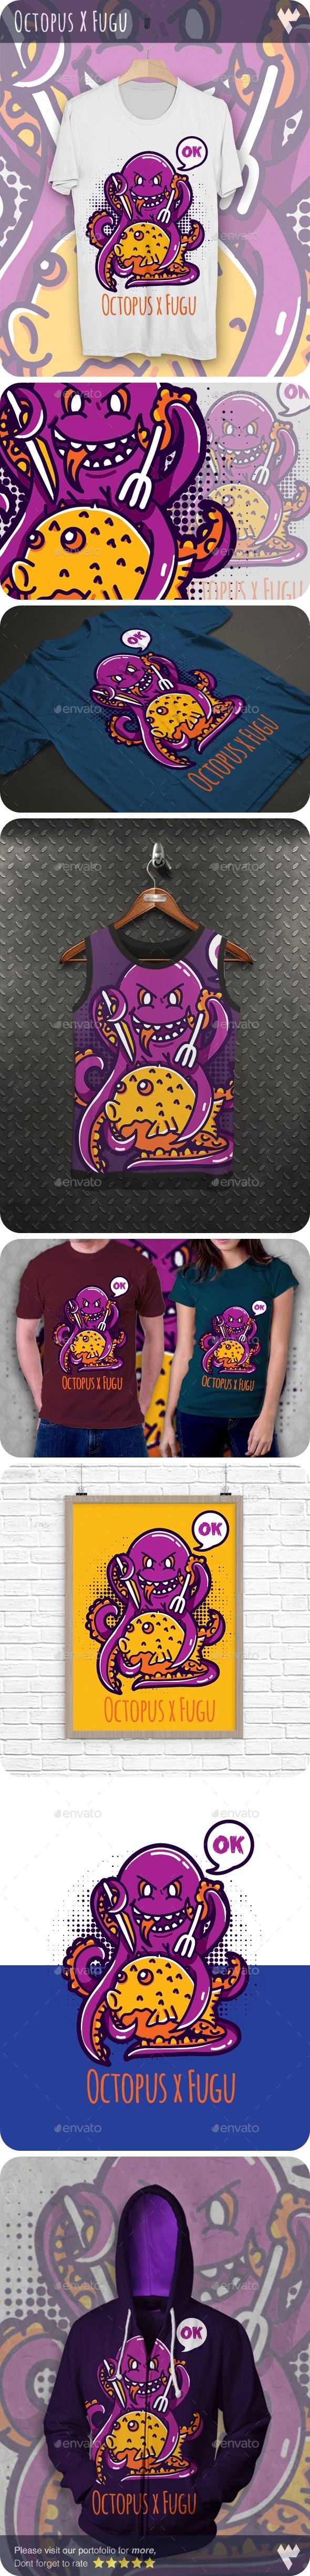 GraphicRiver Octopus X Fugu Fish T-Shirt Design 20388847